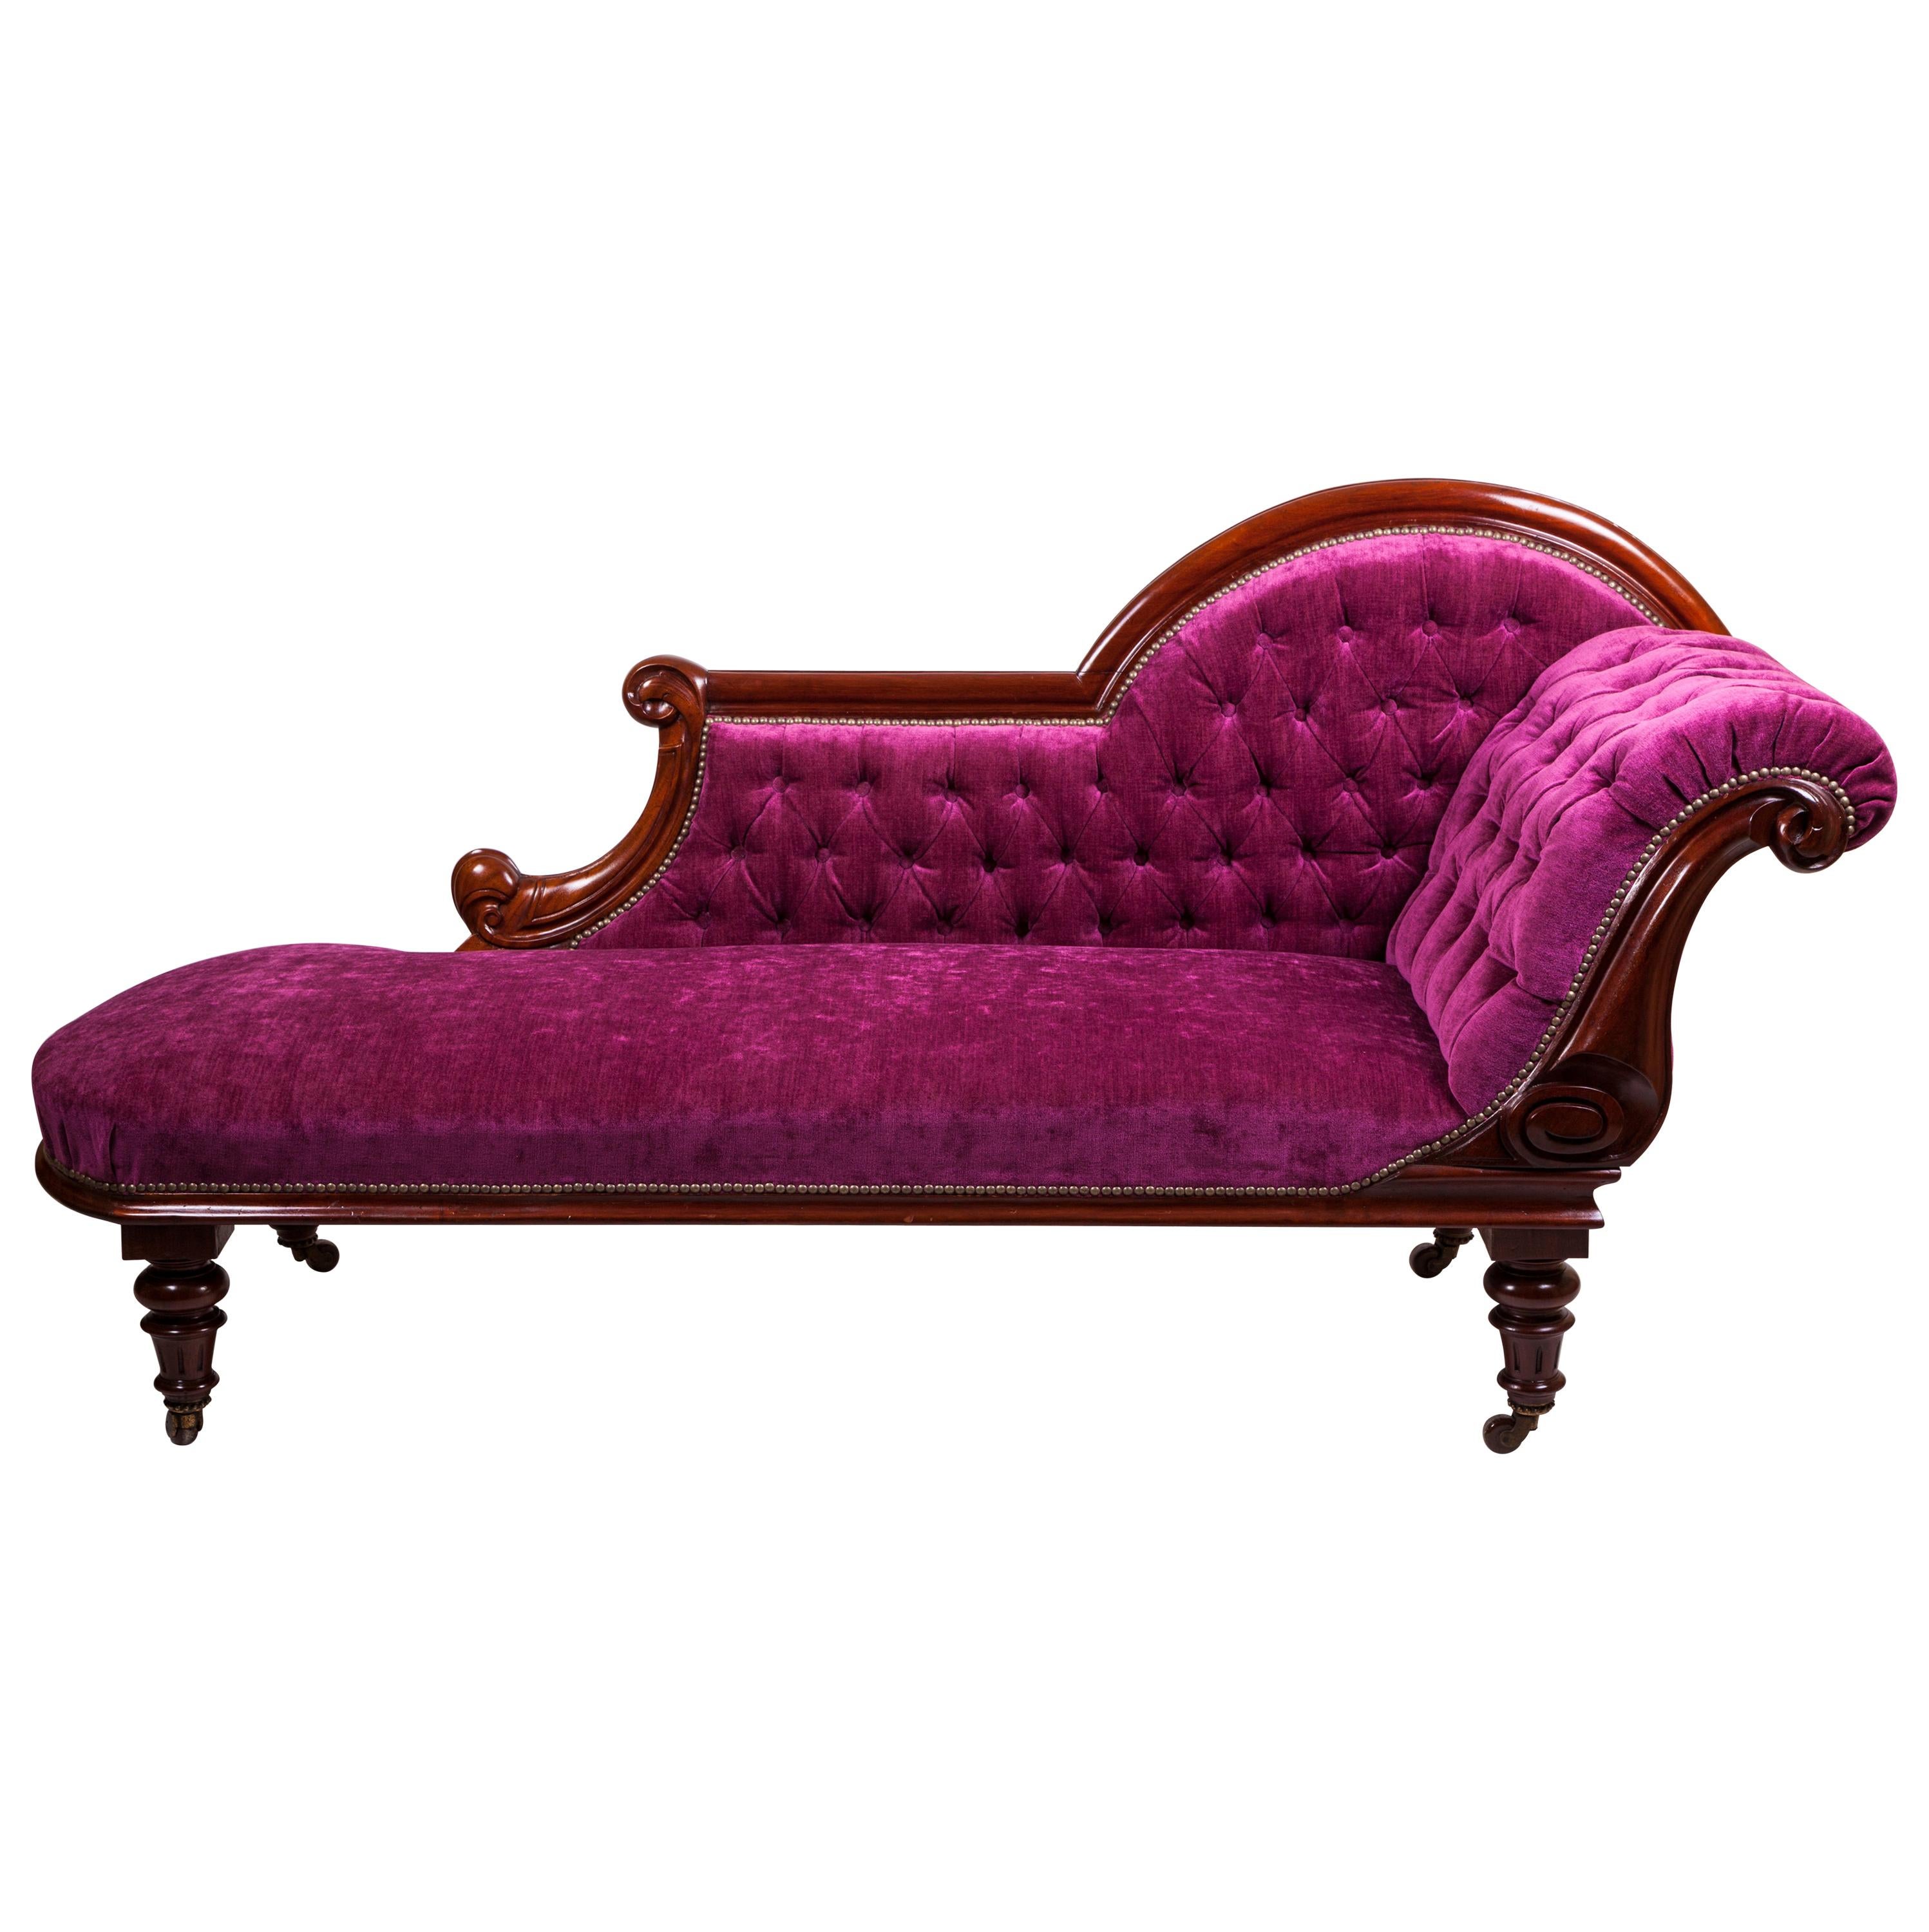 19th Century Victorian Mahogany Chaise Lounge